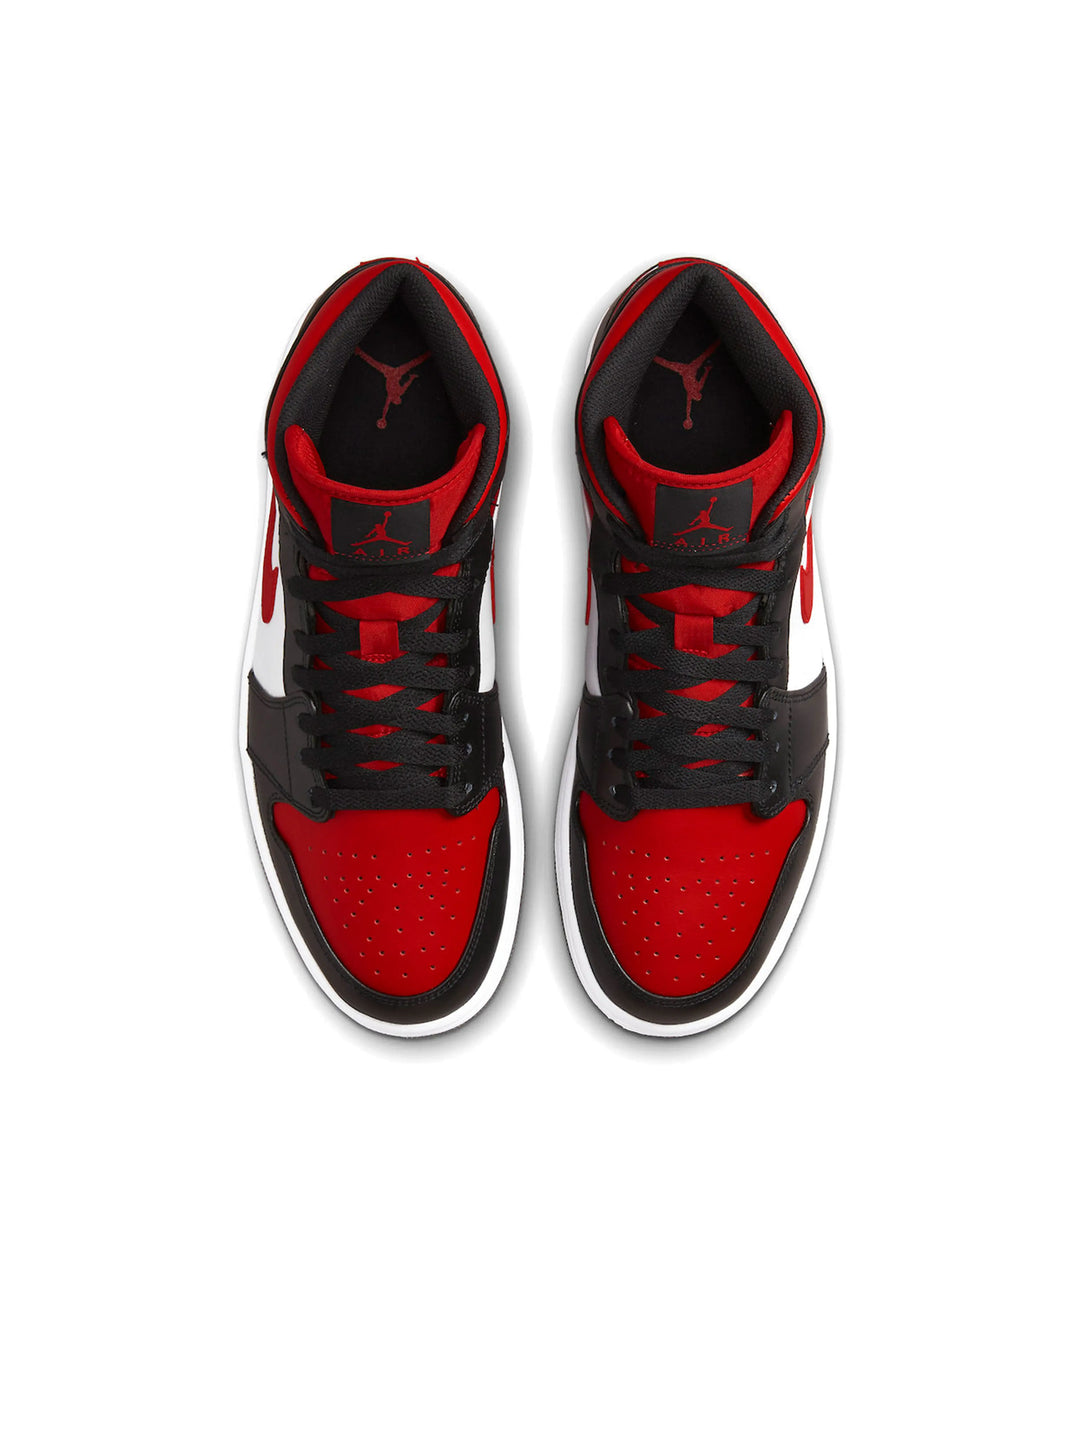 Nike Air Jordan 1 Mid Black Fire Red Prior